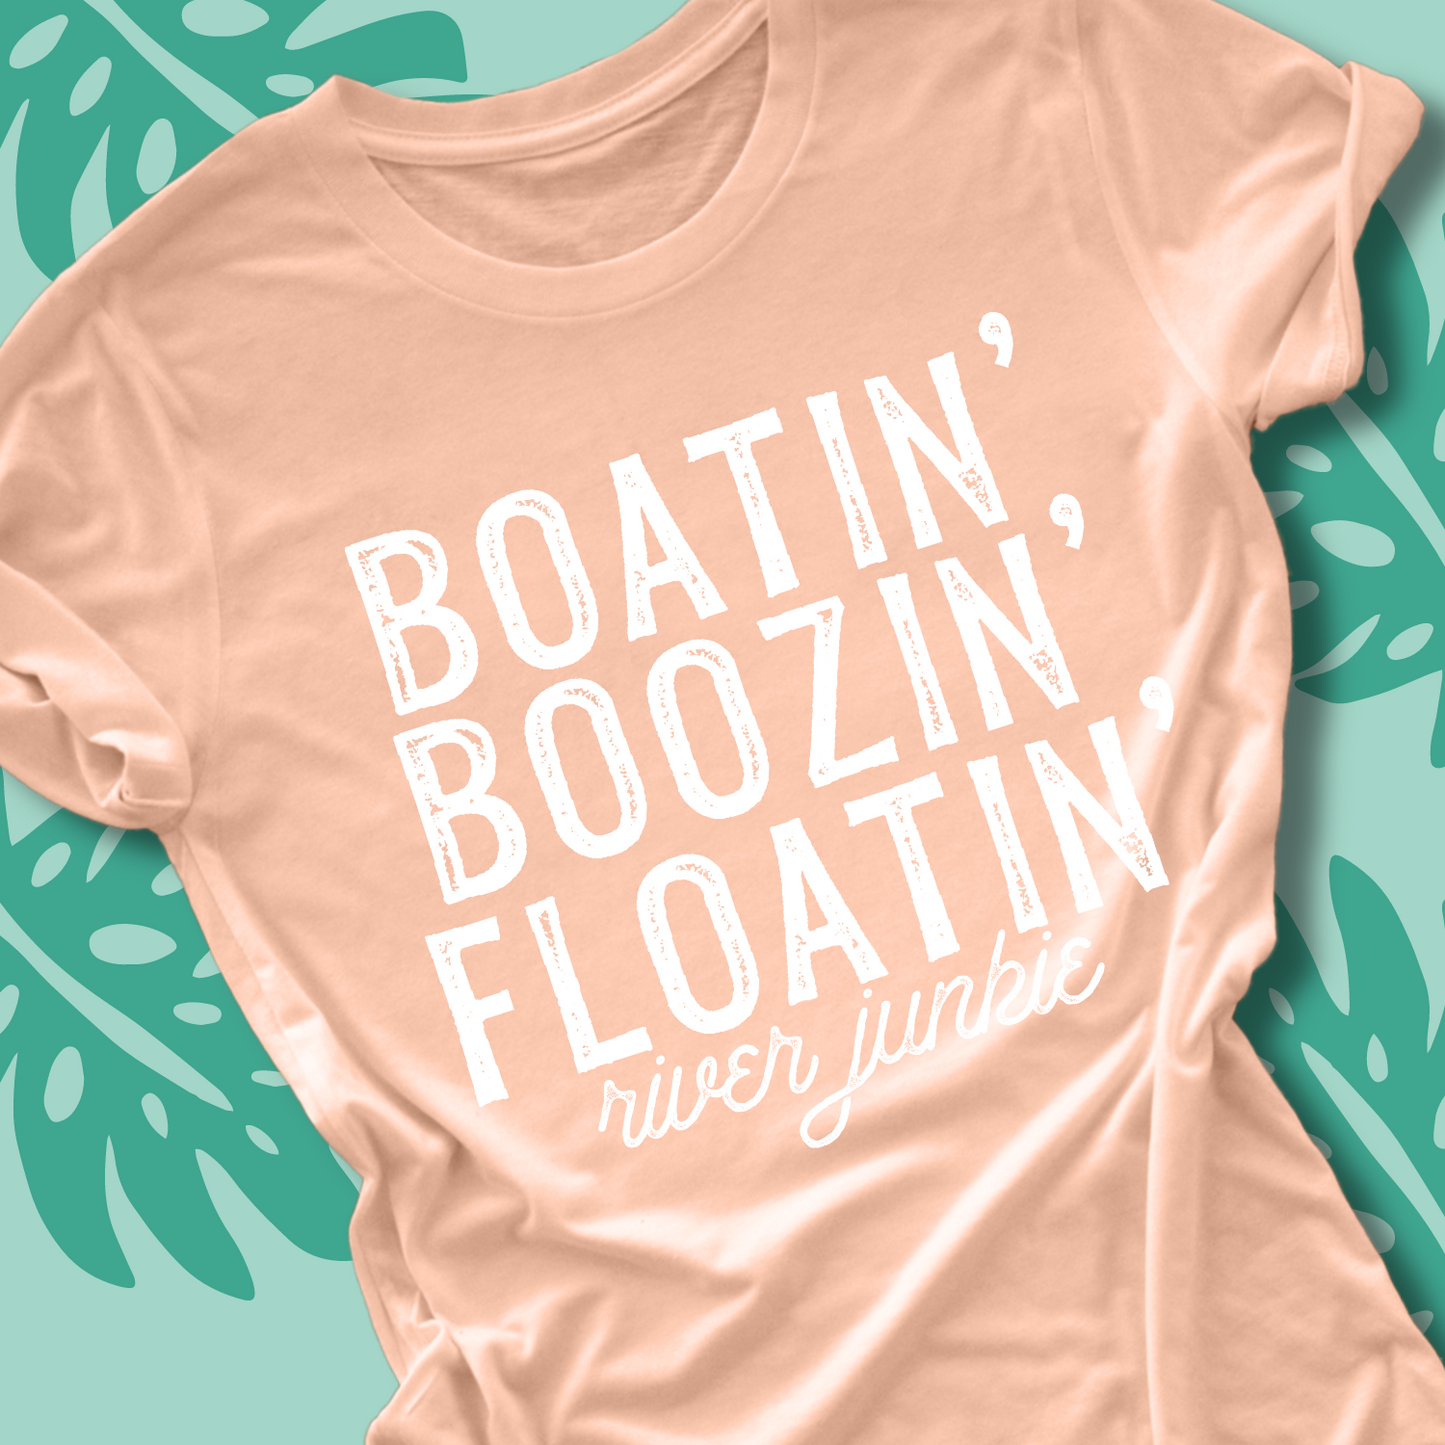 Boatin' Boozin' Floatin' river junkie Adult Graphic Tee